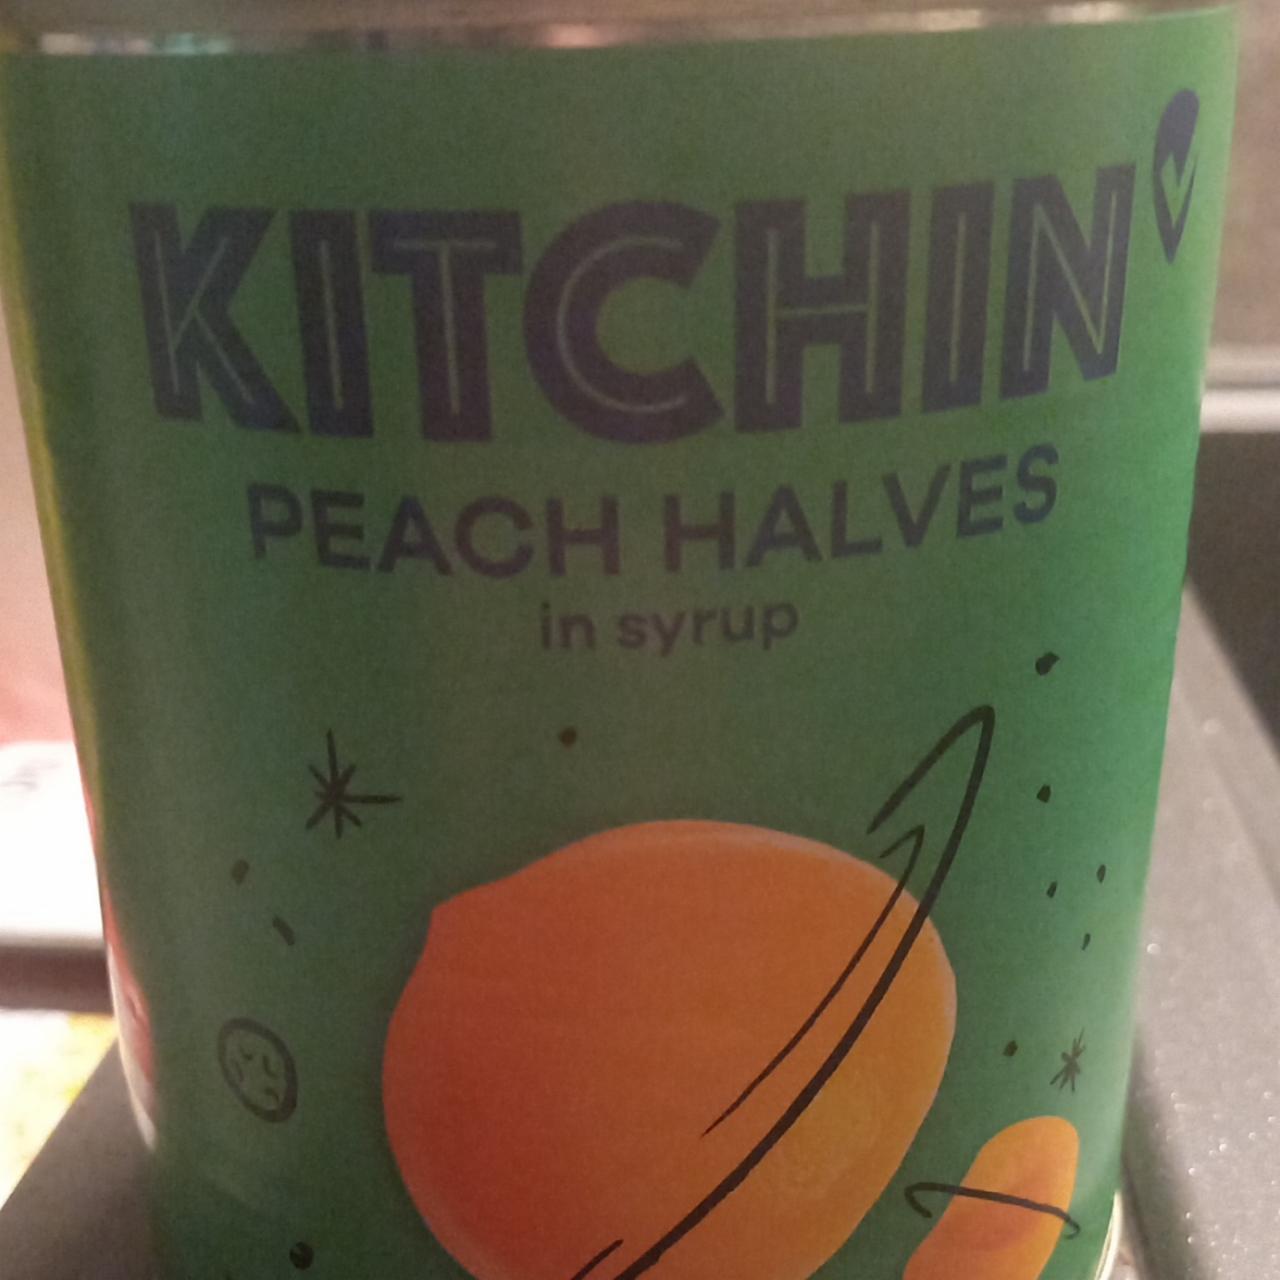 Fotografie - Peach Halves in syrup Kitchin